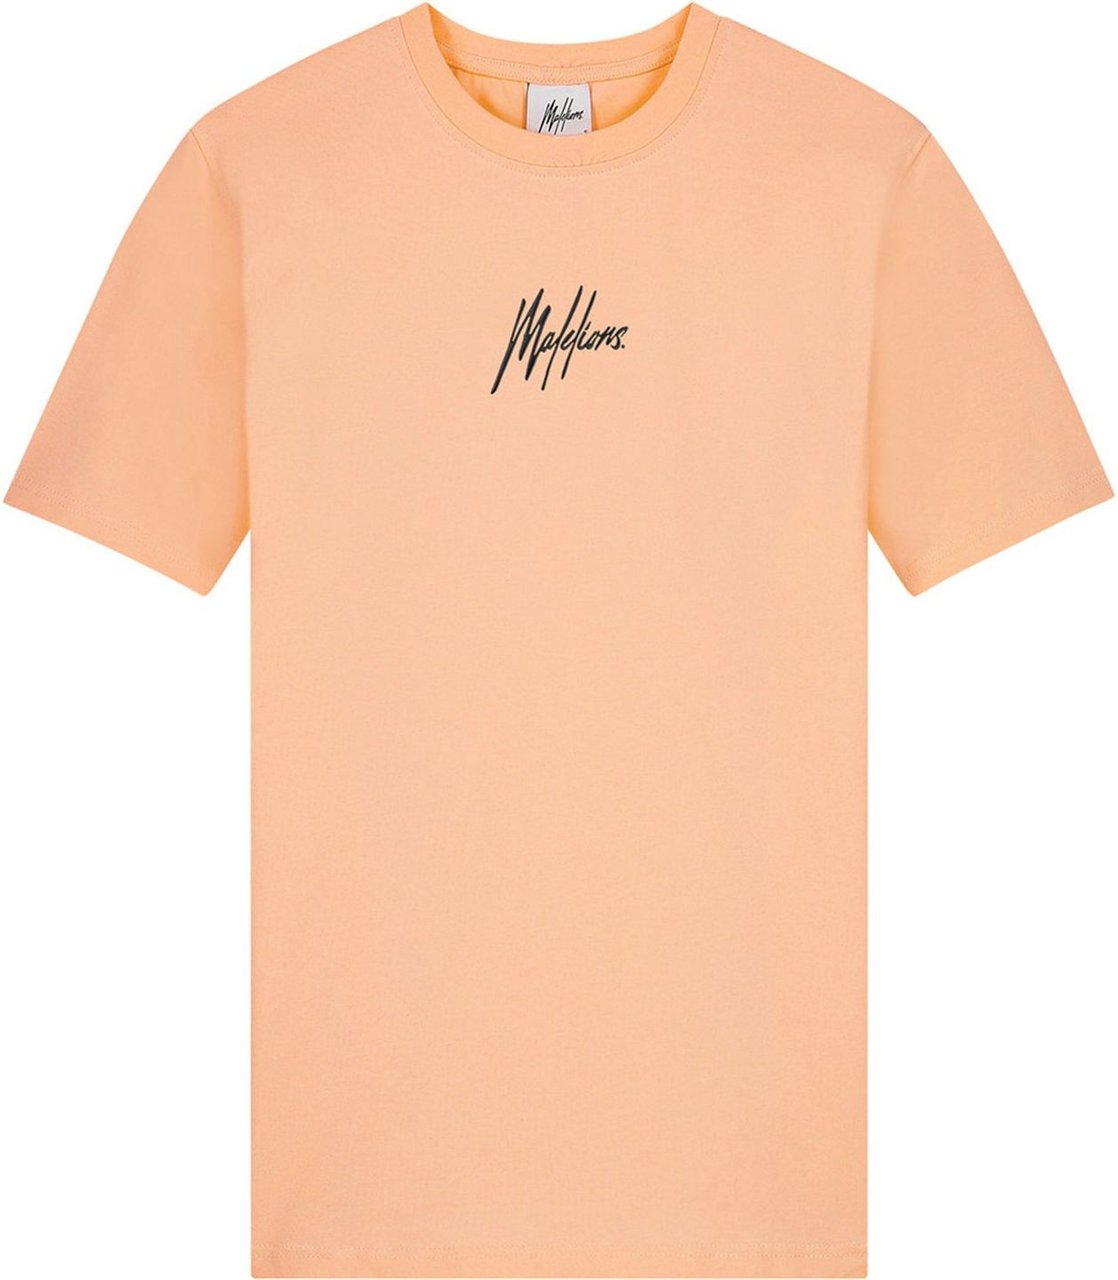 Malelions Women Kiki T-Shirt - Peach Roze